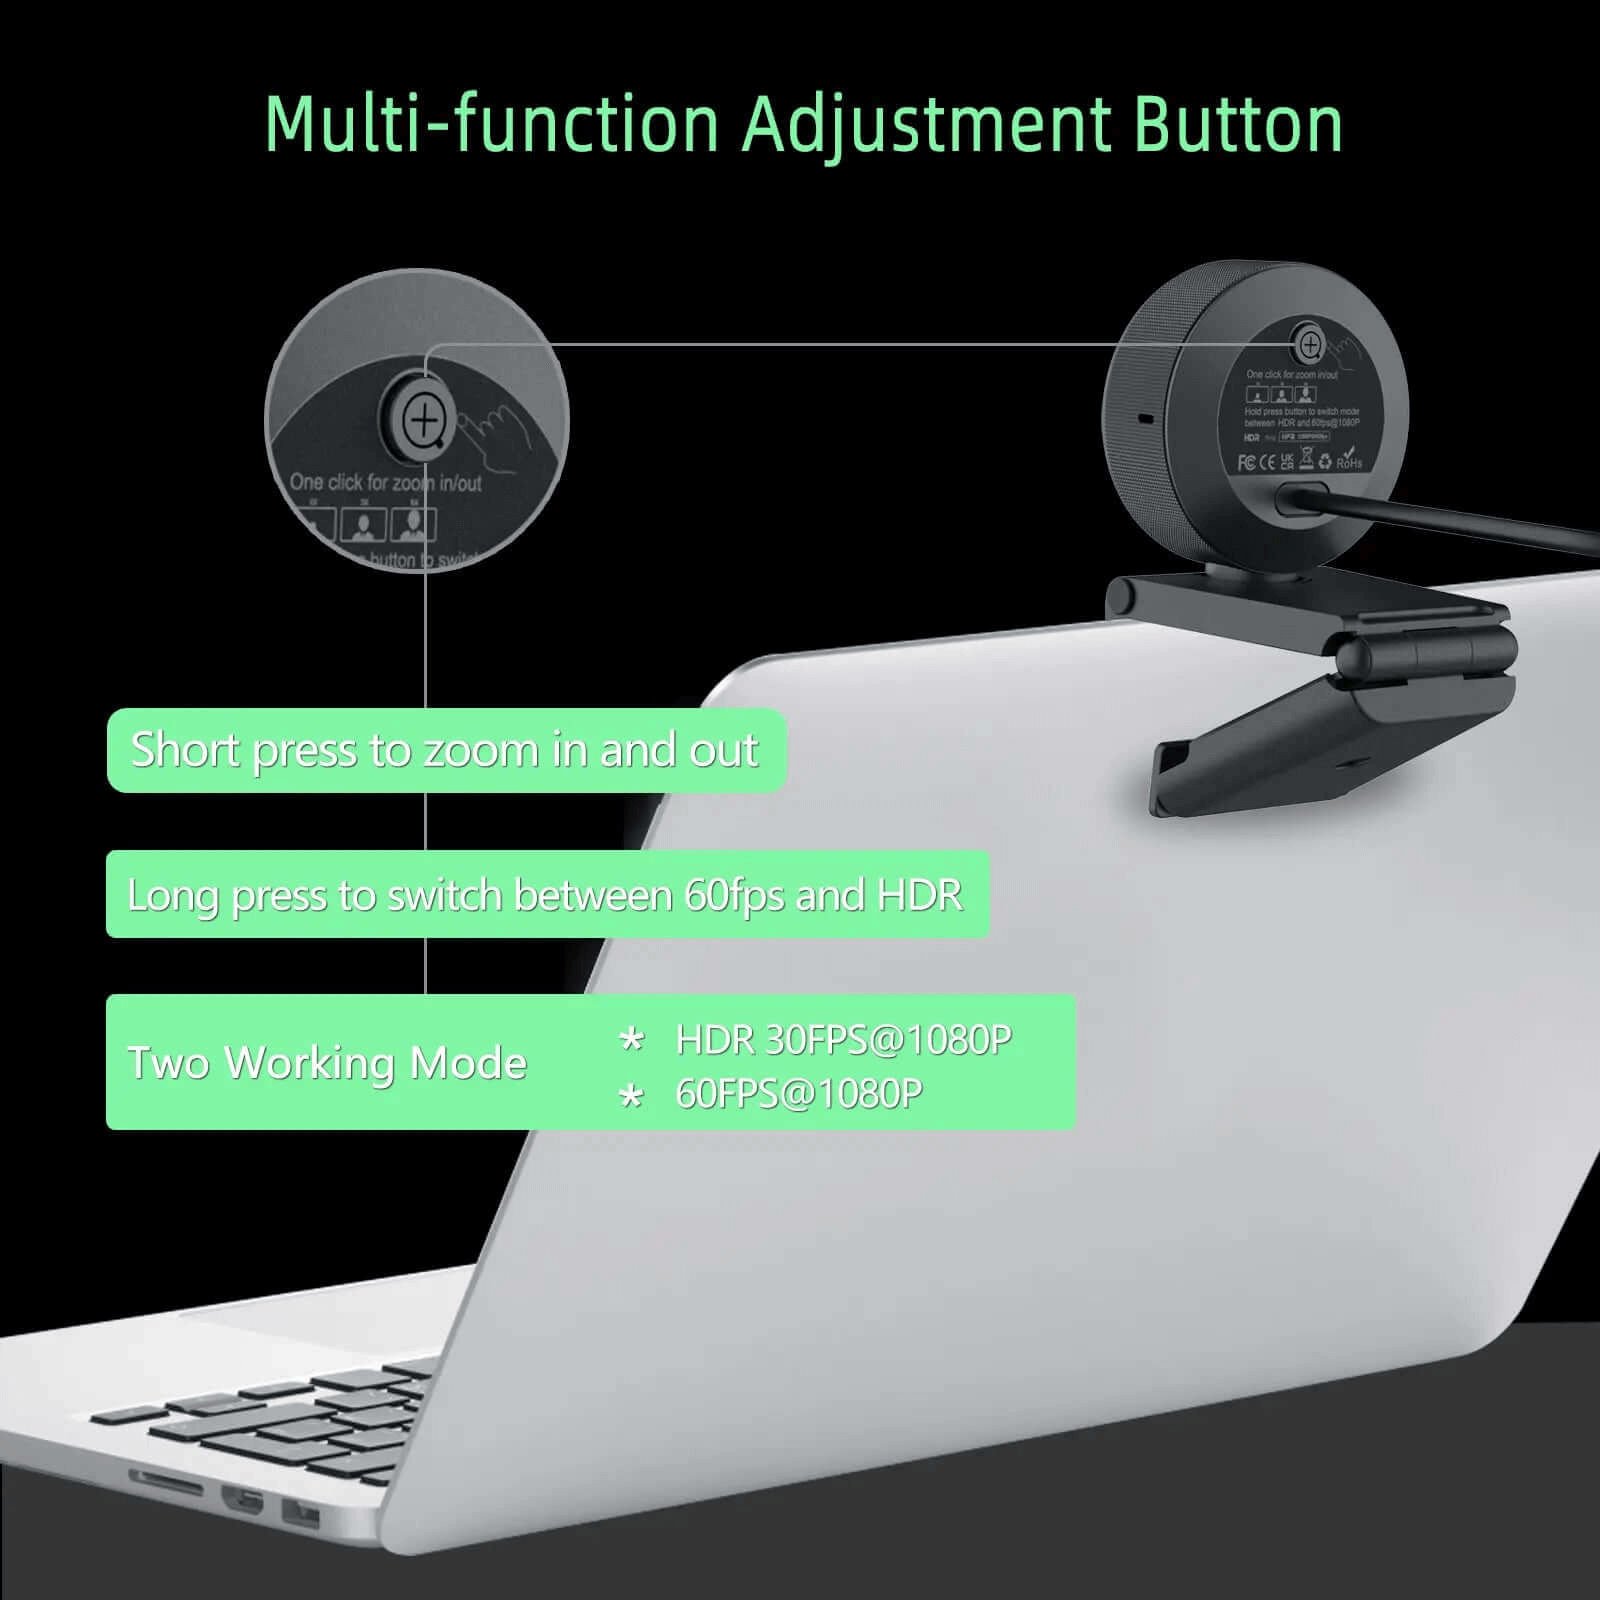 Multi-function Adjustment Button